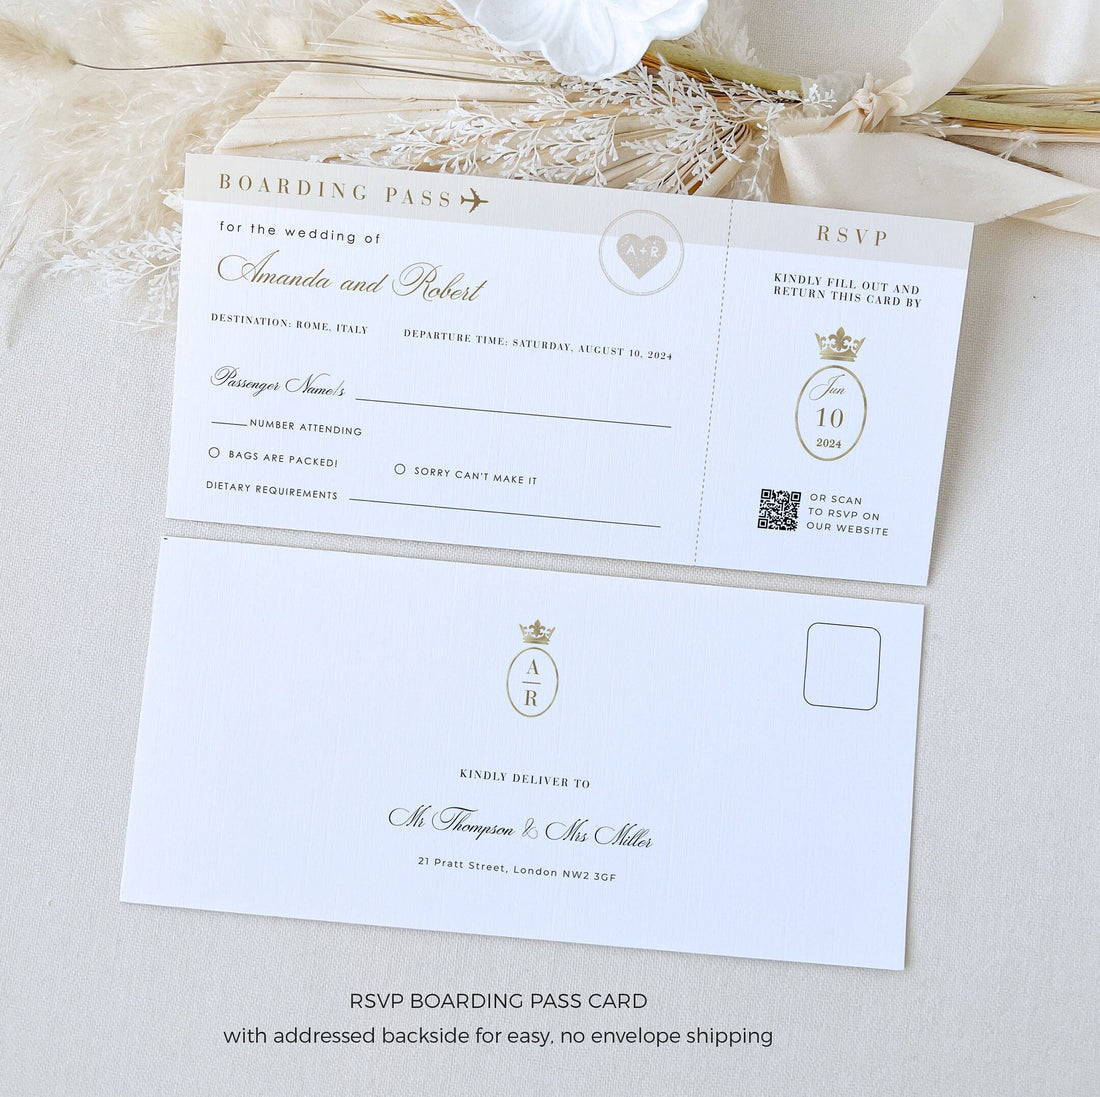 White & Gold Passport Wedding Invitation Template